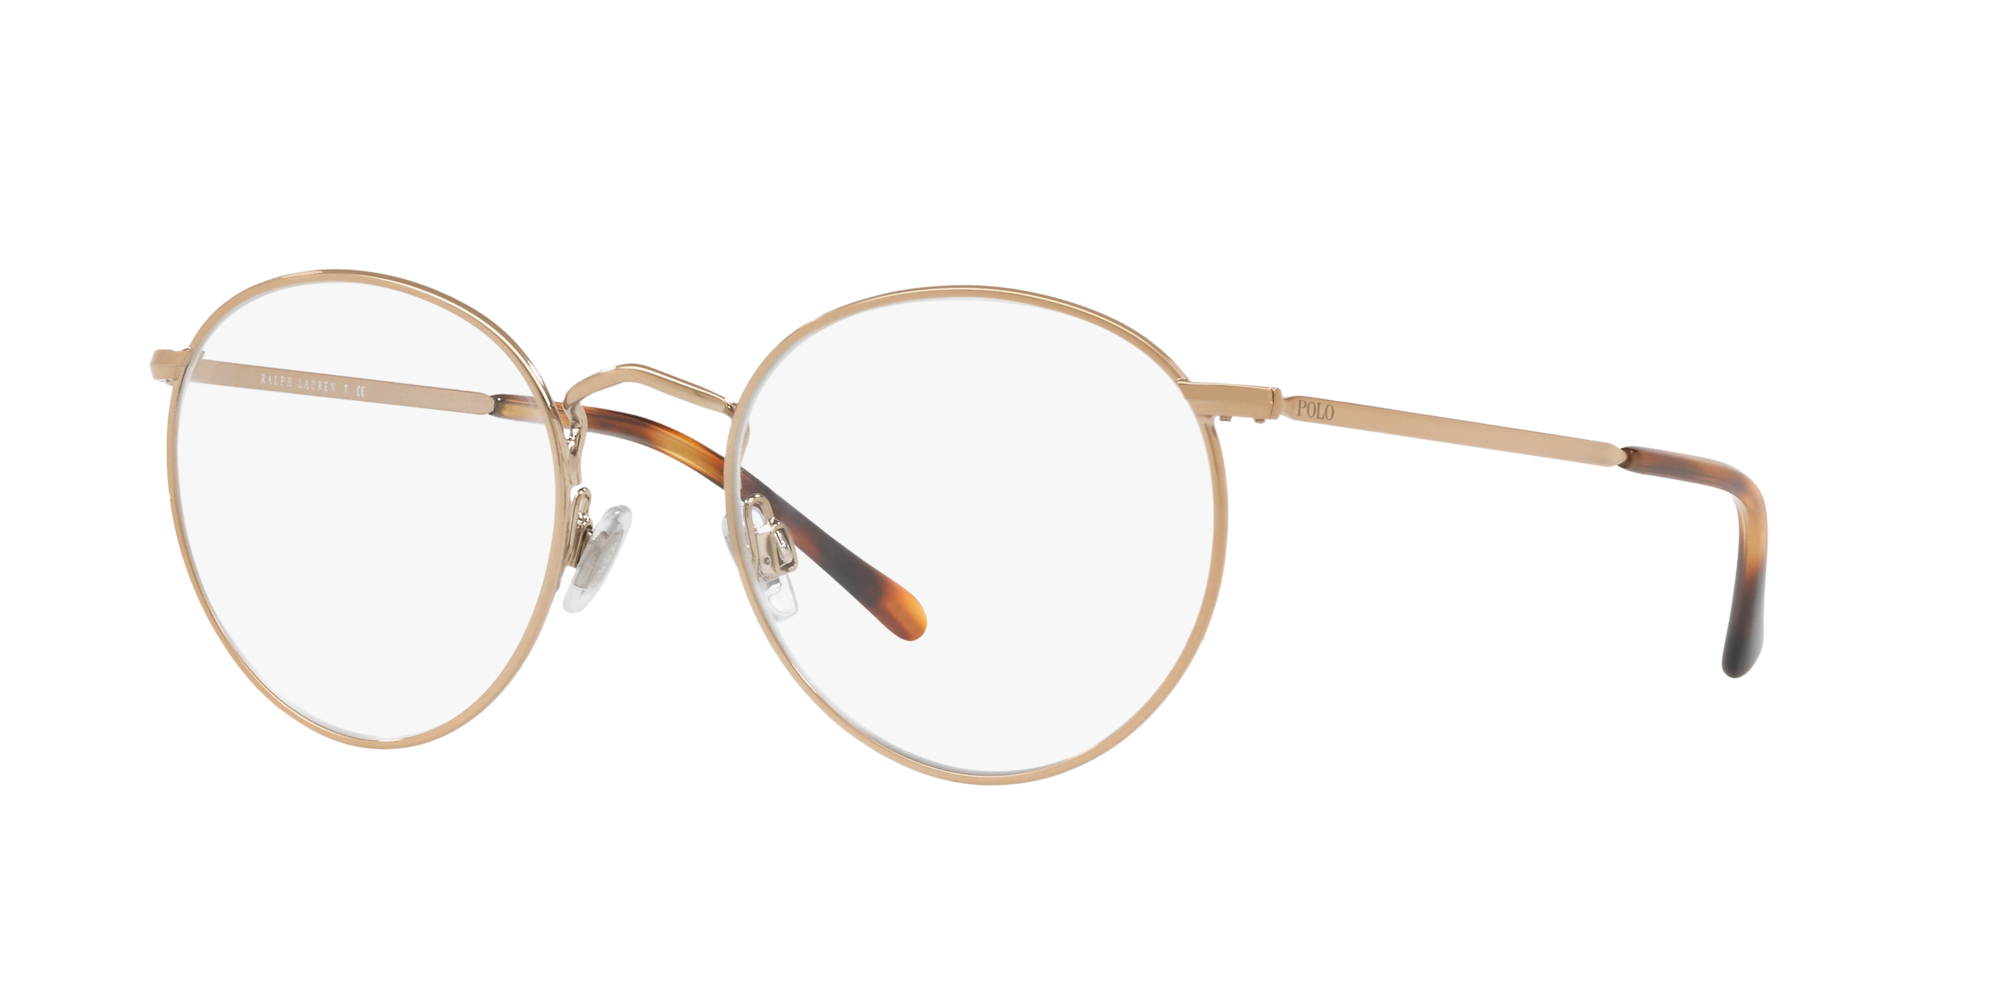 PH1179: Shop Polo Ralph Lauren Gold Panthos Eyeglasses at LensCrafters